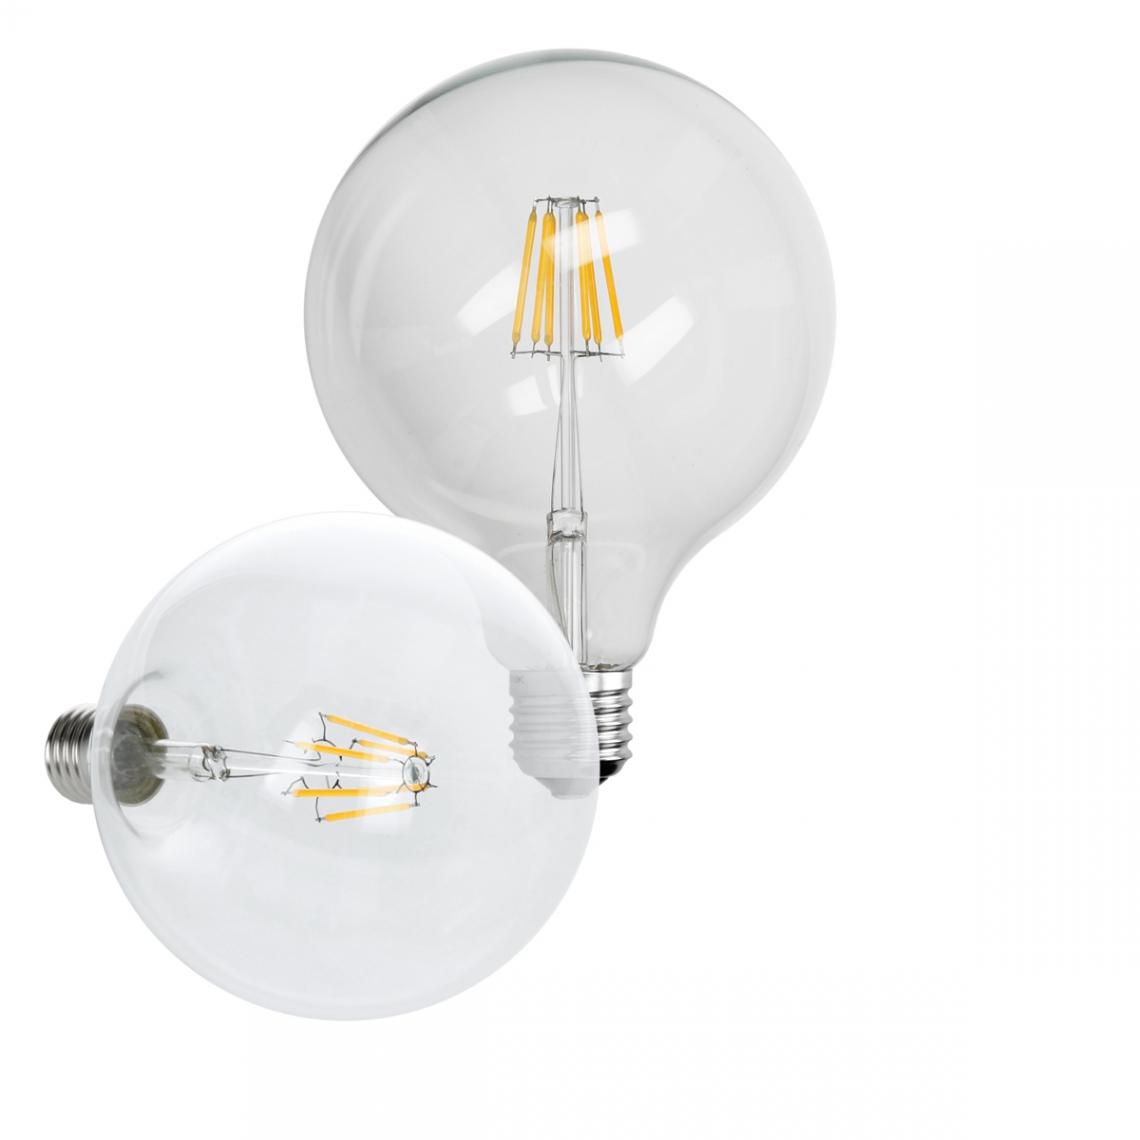 Ecd Germany - ECD Germany 1 x Filament LED E27 Edison 6W 125 mm 624 lumens Angle de faisceau 120 ° AC 220-240V environ 40W lampe à incandescence Lampe à globe blanc chaud Lampe à globe - Ampoules LED